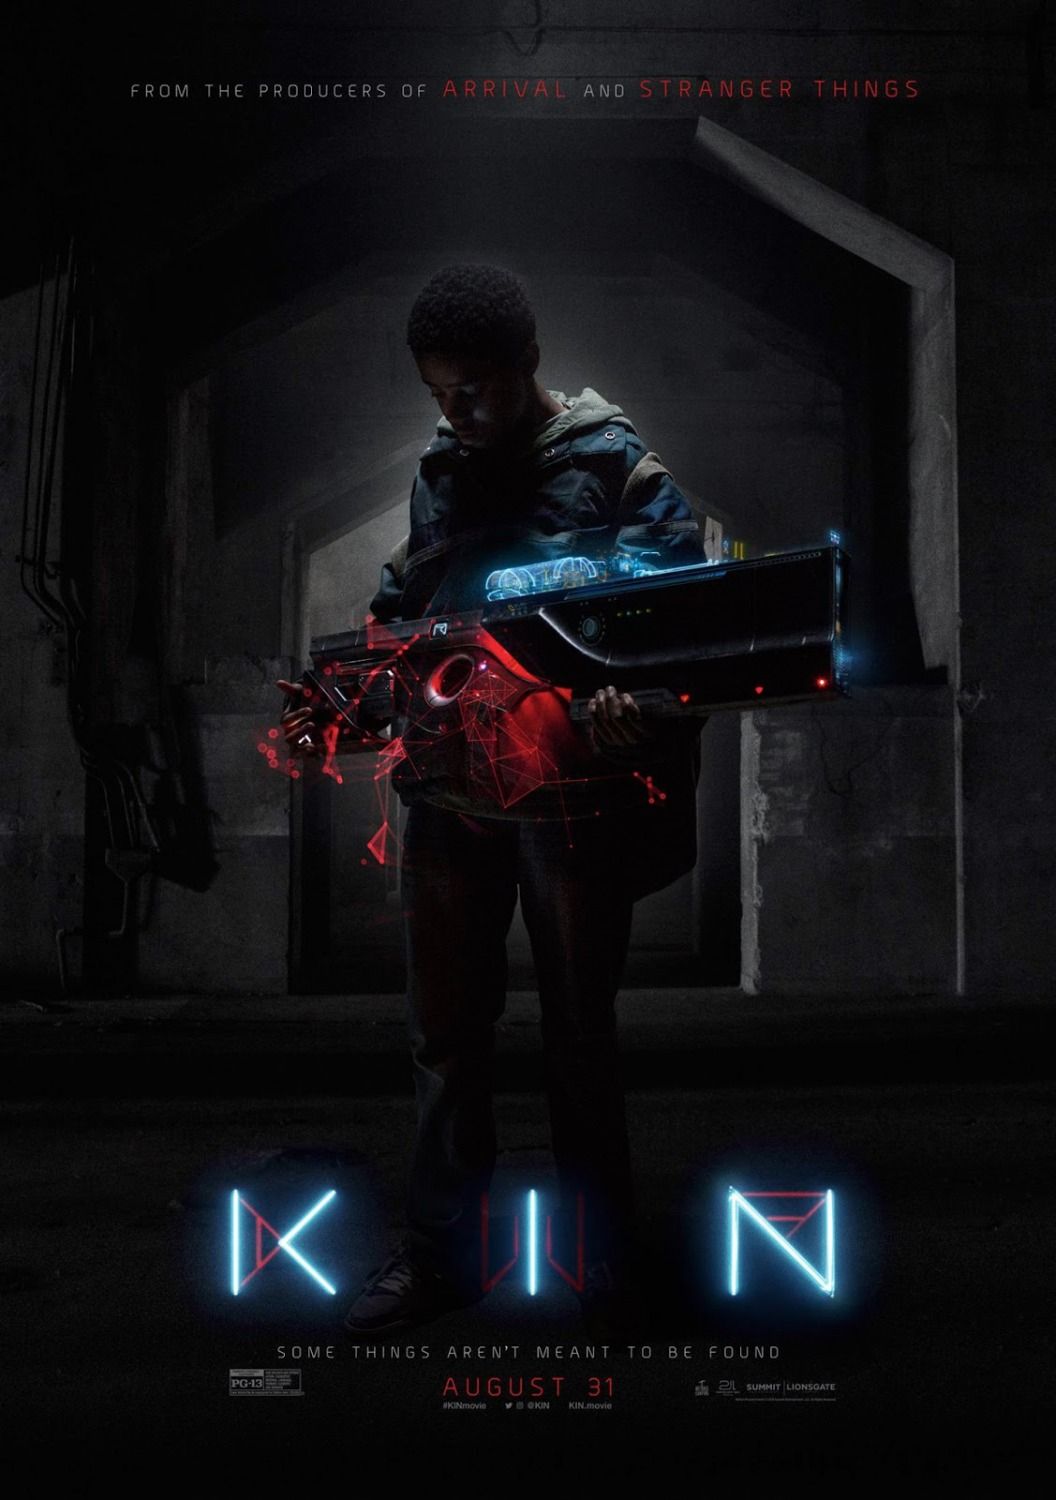 Kin movie poster